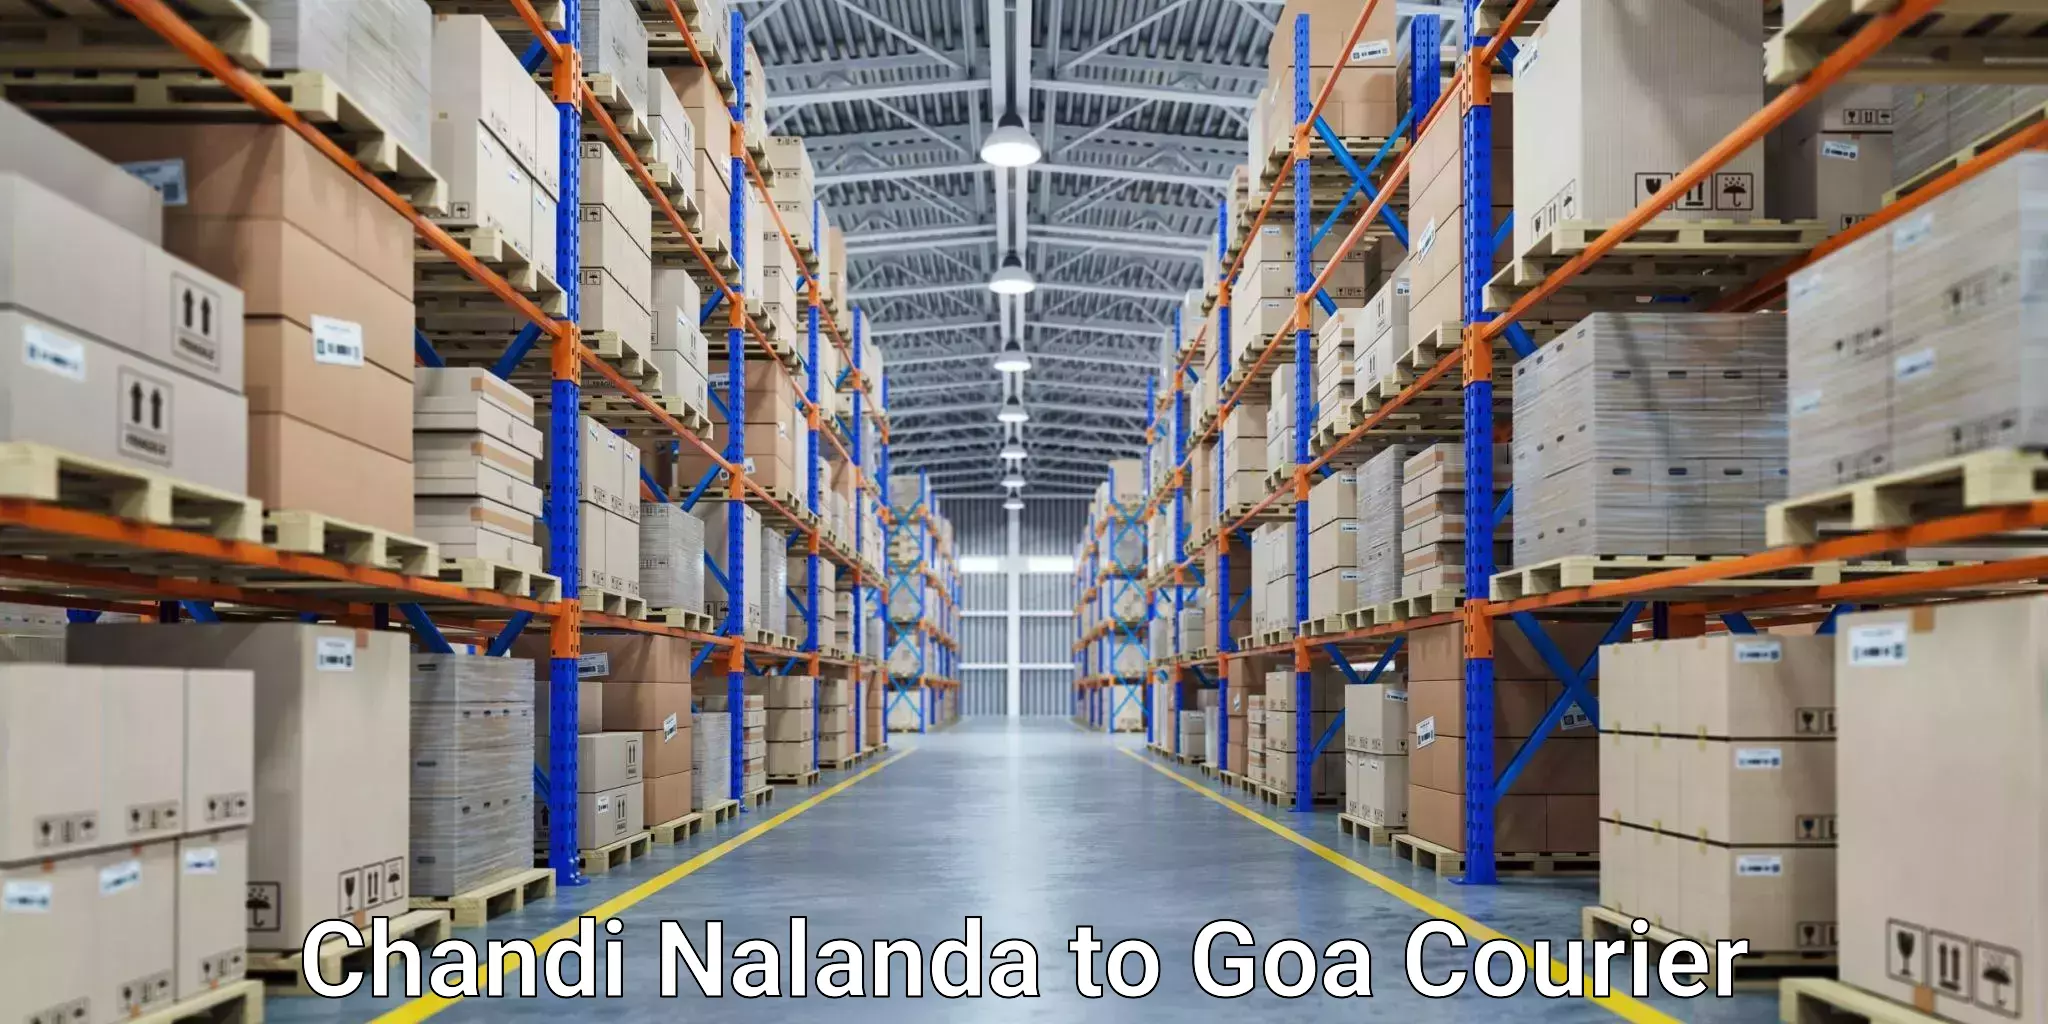 Next-day delivery options Chandi Nalanda to Goa